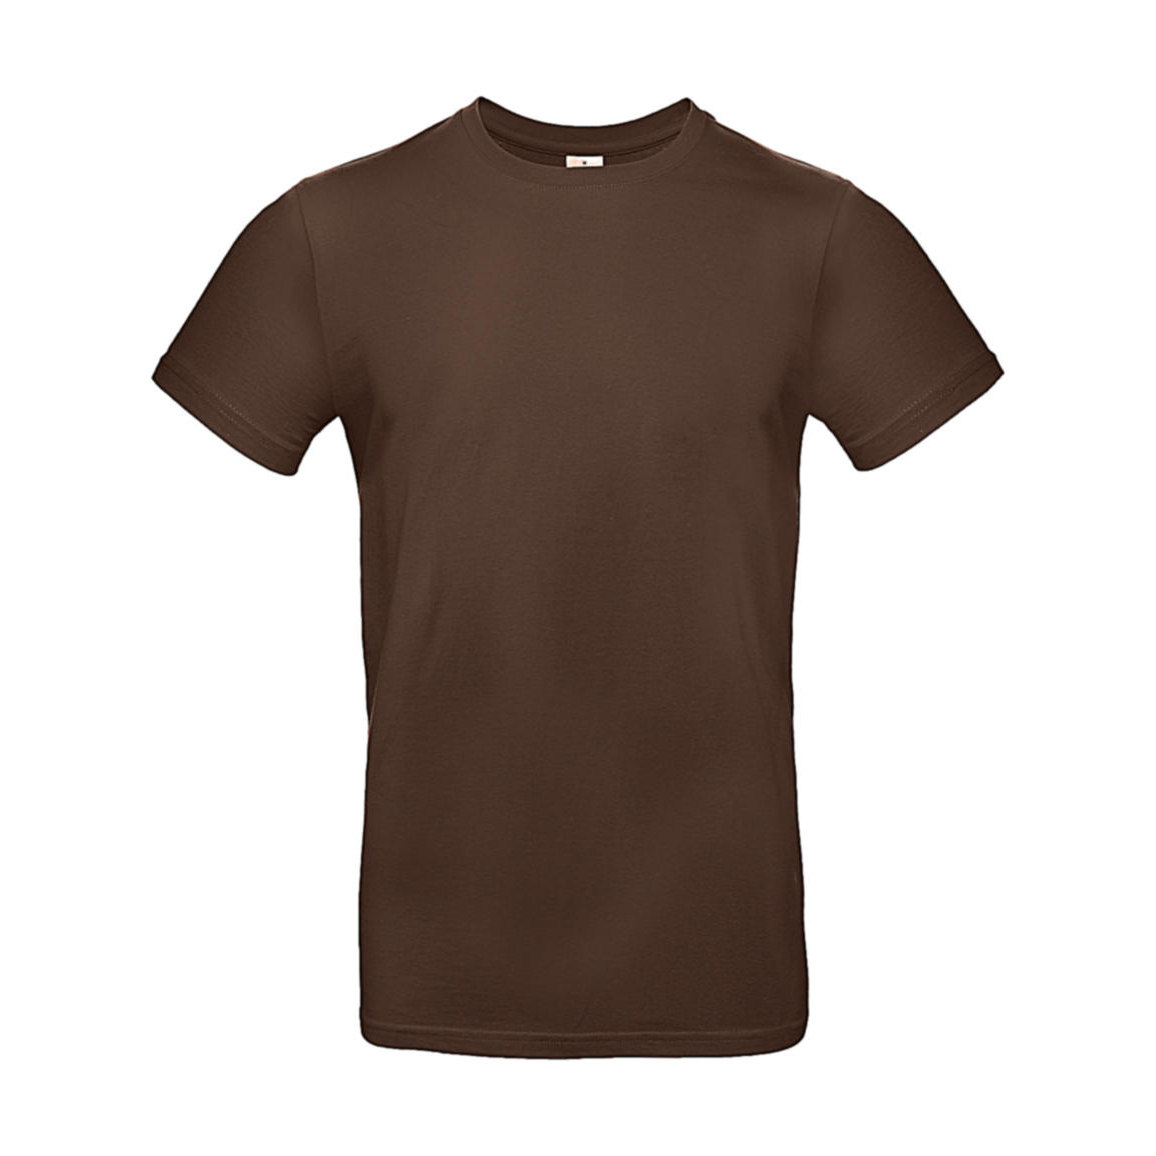 Triko pánské B&C E190 T-Shirt - tmavě hnědé, L